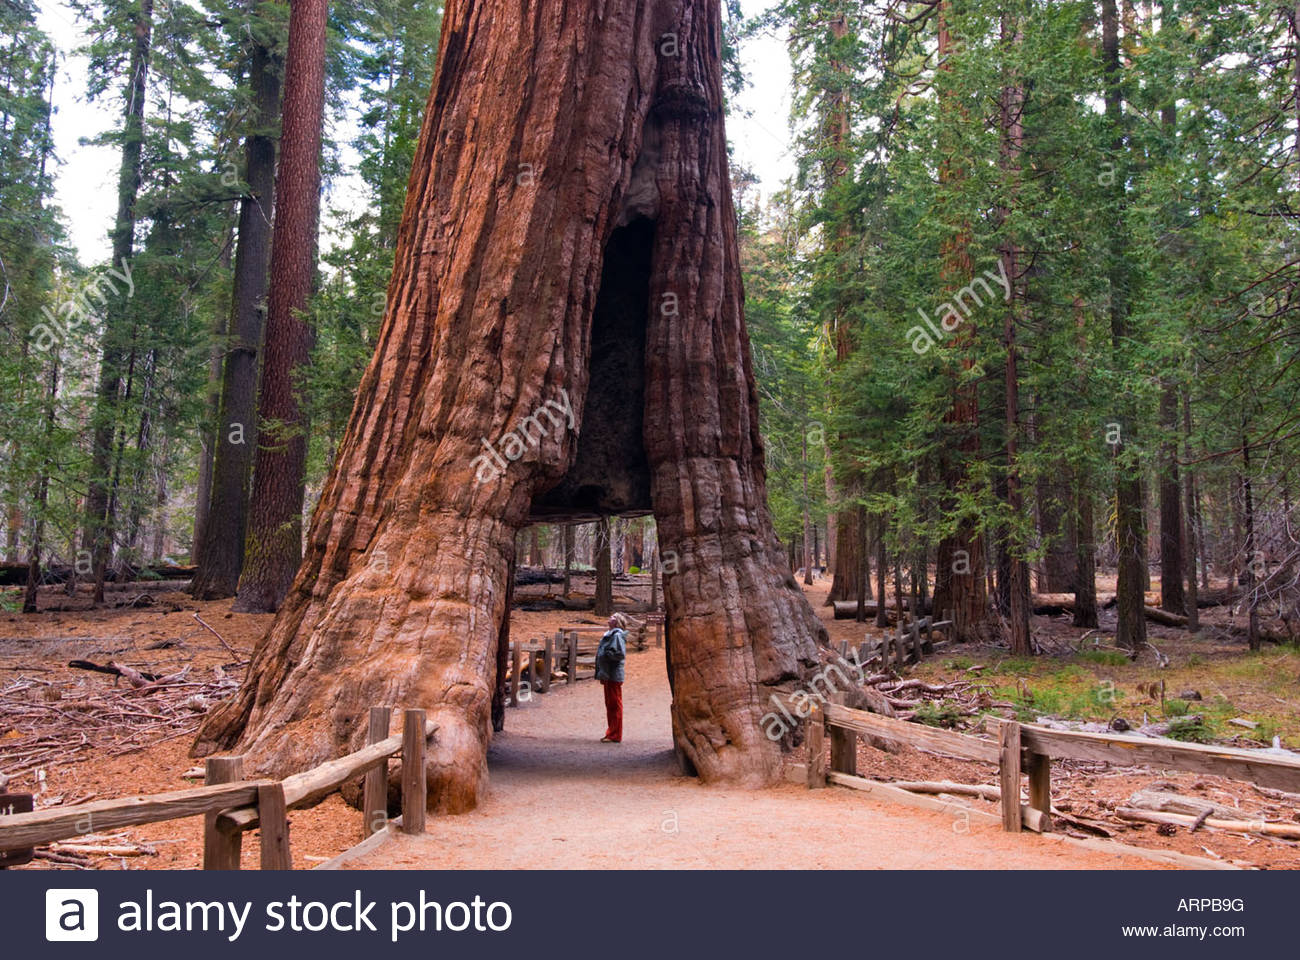 California Tunnel Tree Mariposa Grove Yosemite National Park